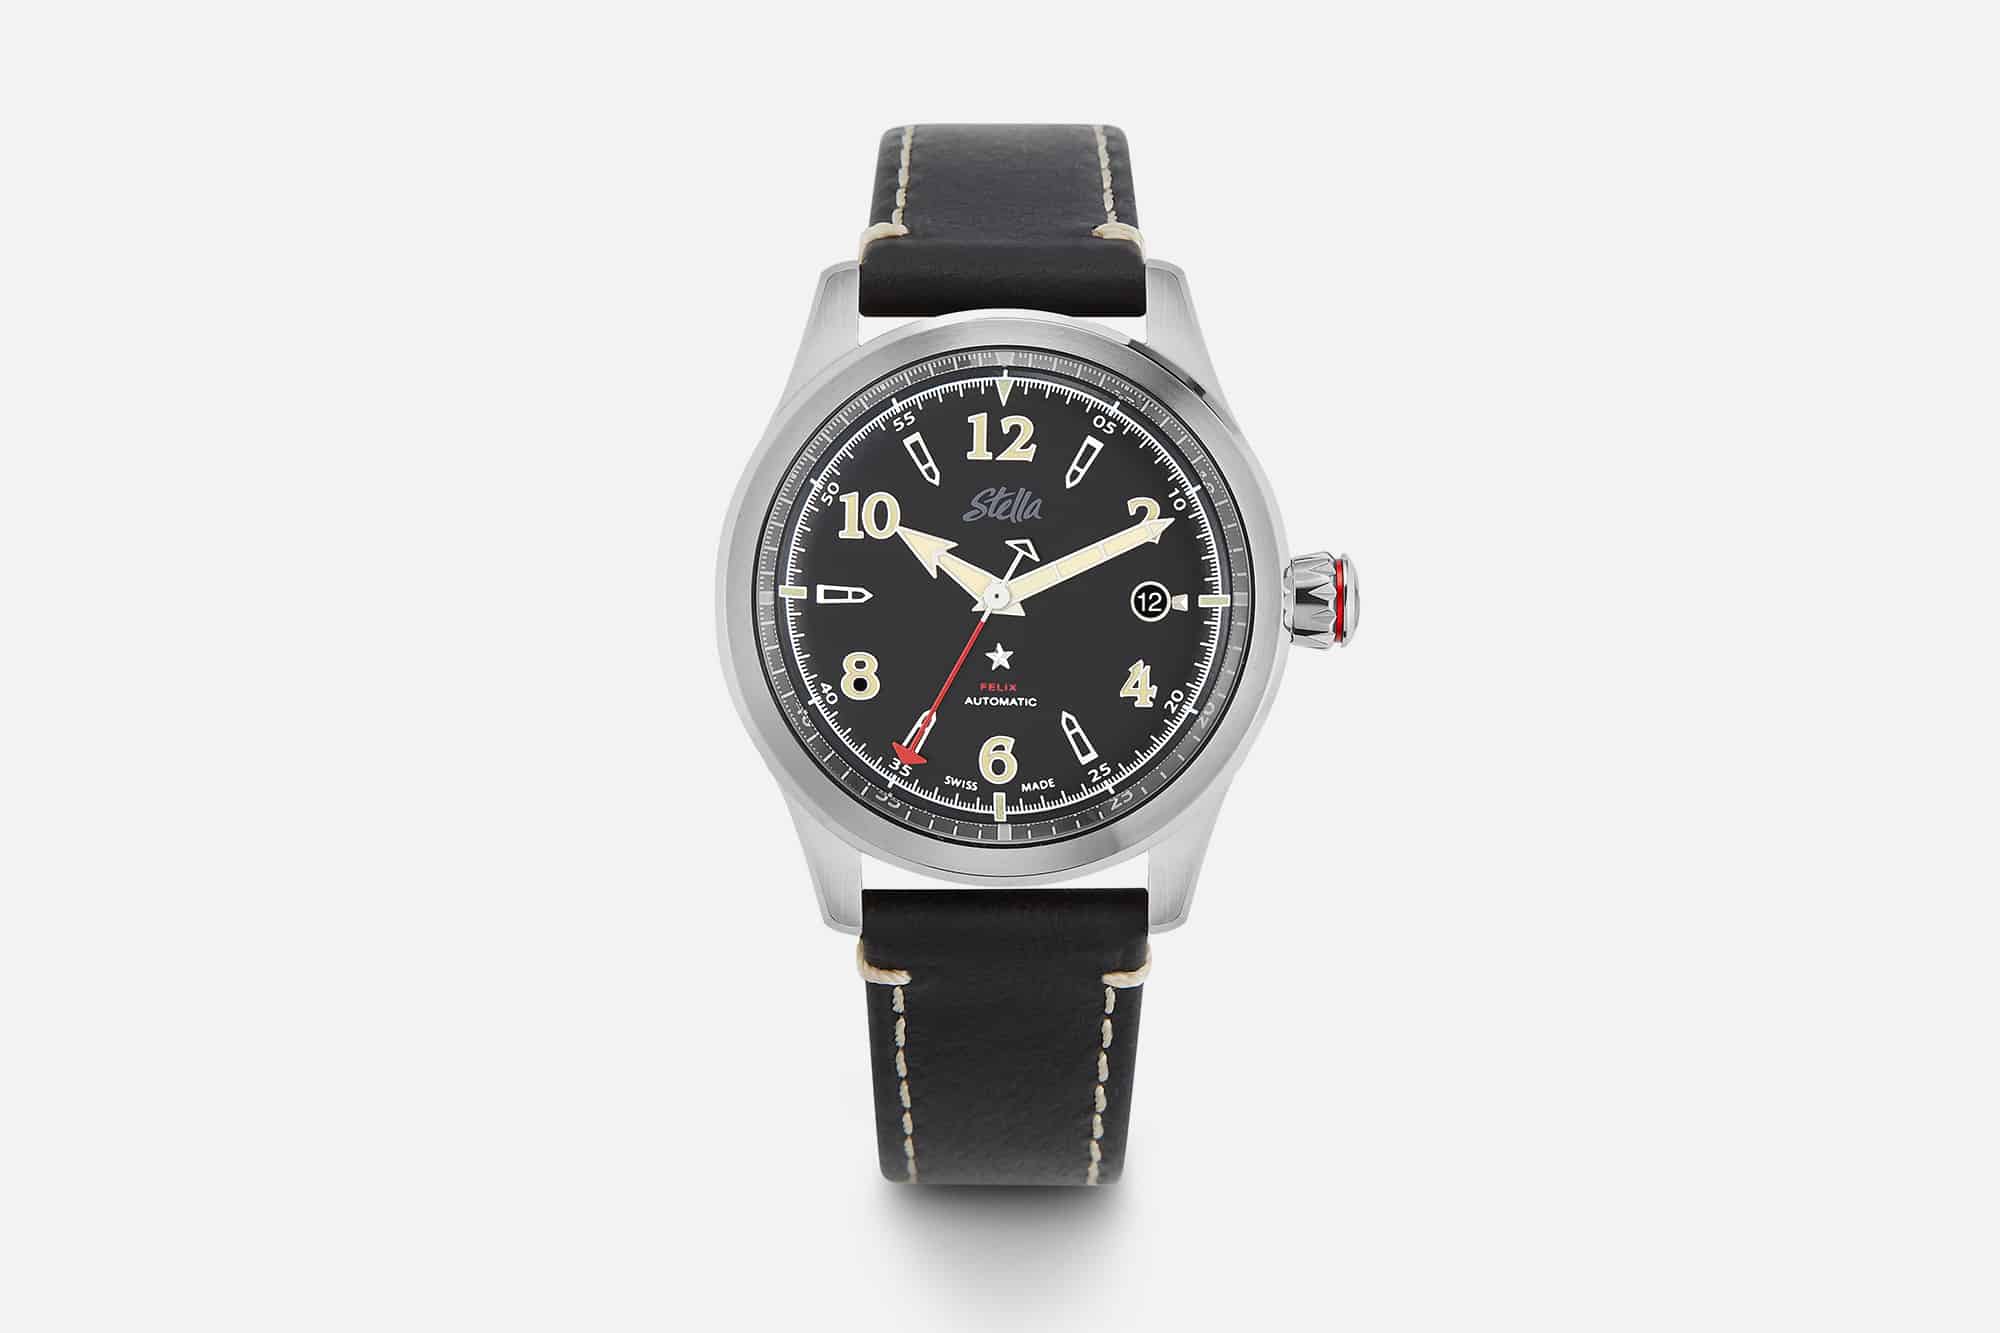 New York Based Stella Watch Company Launches the Felix on Kickstarter